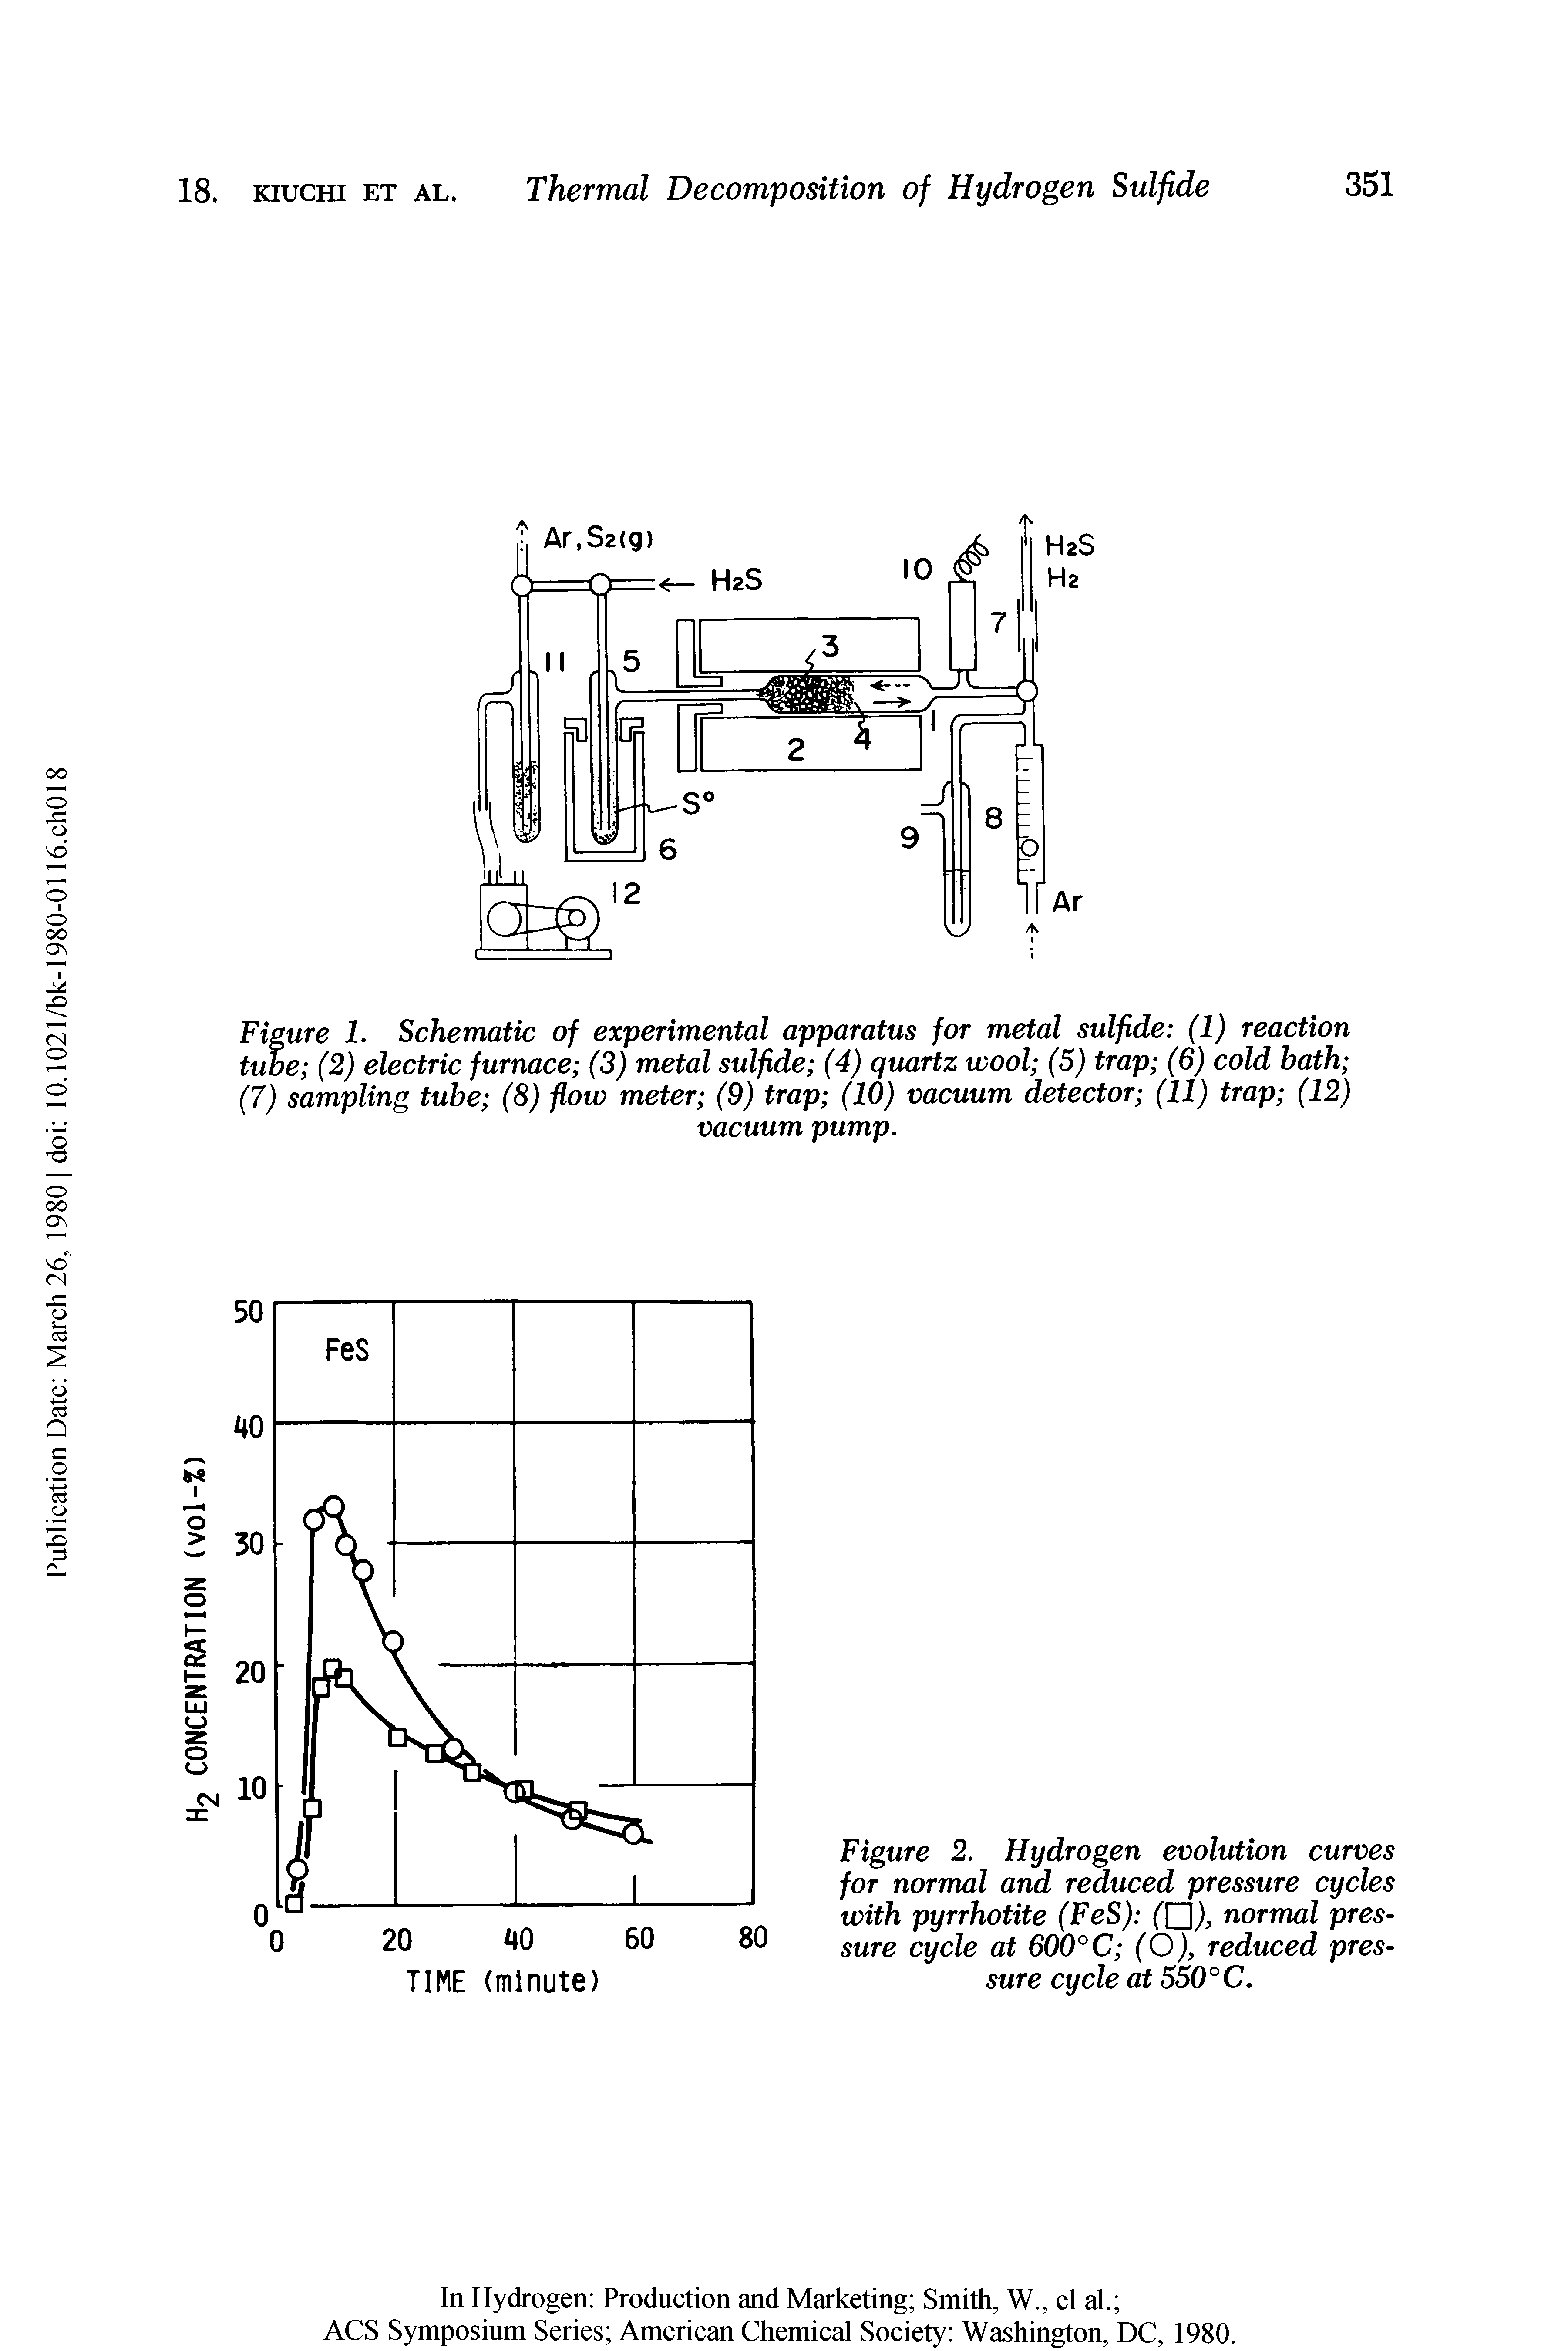 Figure 1. Schematic of experimental apparatus for metal sulfide (1) reaction tube (2) electric furnace (3) metal sulfide (4) quartz wool (5) trap (6) cold bath (7) sampling tube (8) flow meter (9) trap (10) vacuum detector (11) trap (12)...